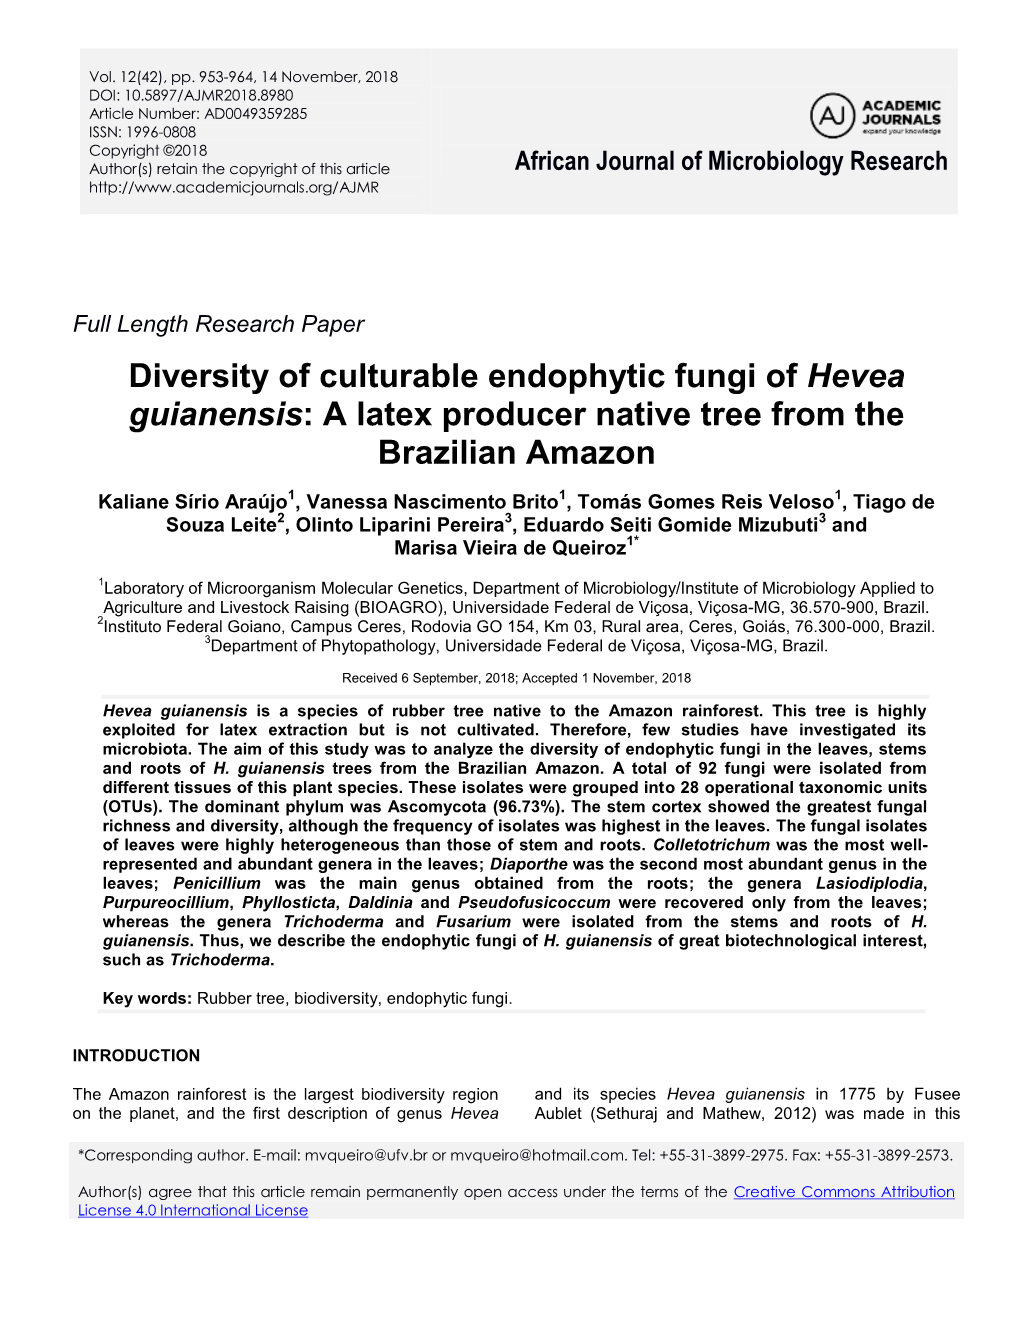 Diversity of Culturable Endophytic Fungi of Hevea Guianensis: a Latex Producer Native Tree from the Brazilian Amazon